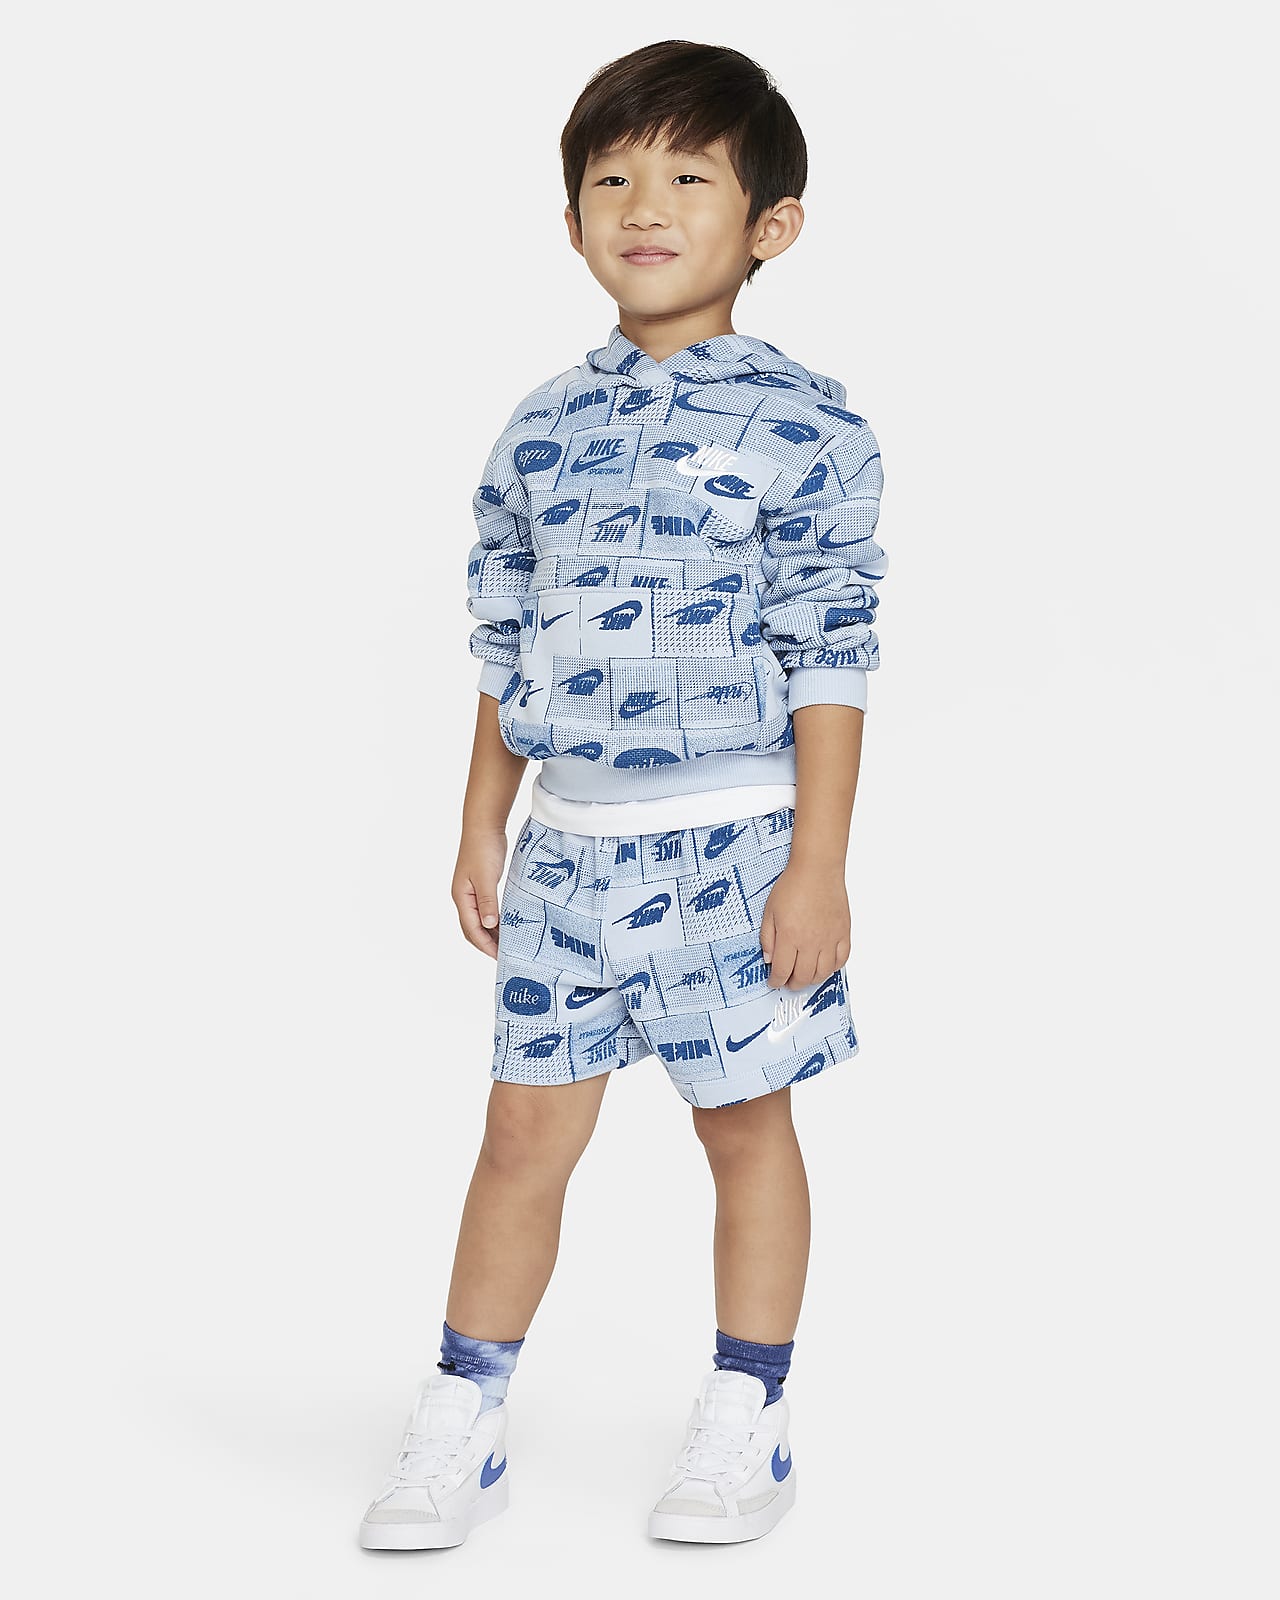 Nike Sportswear Toddler Shorts. Printed Club